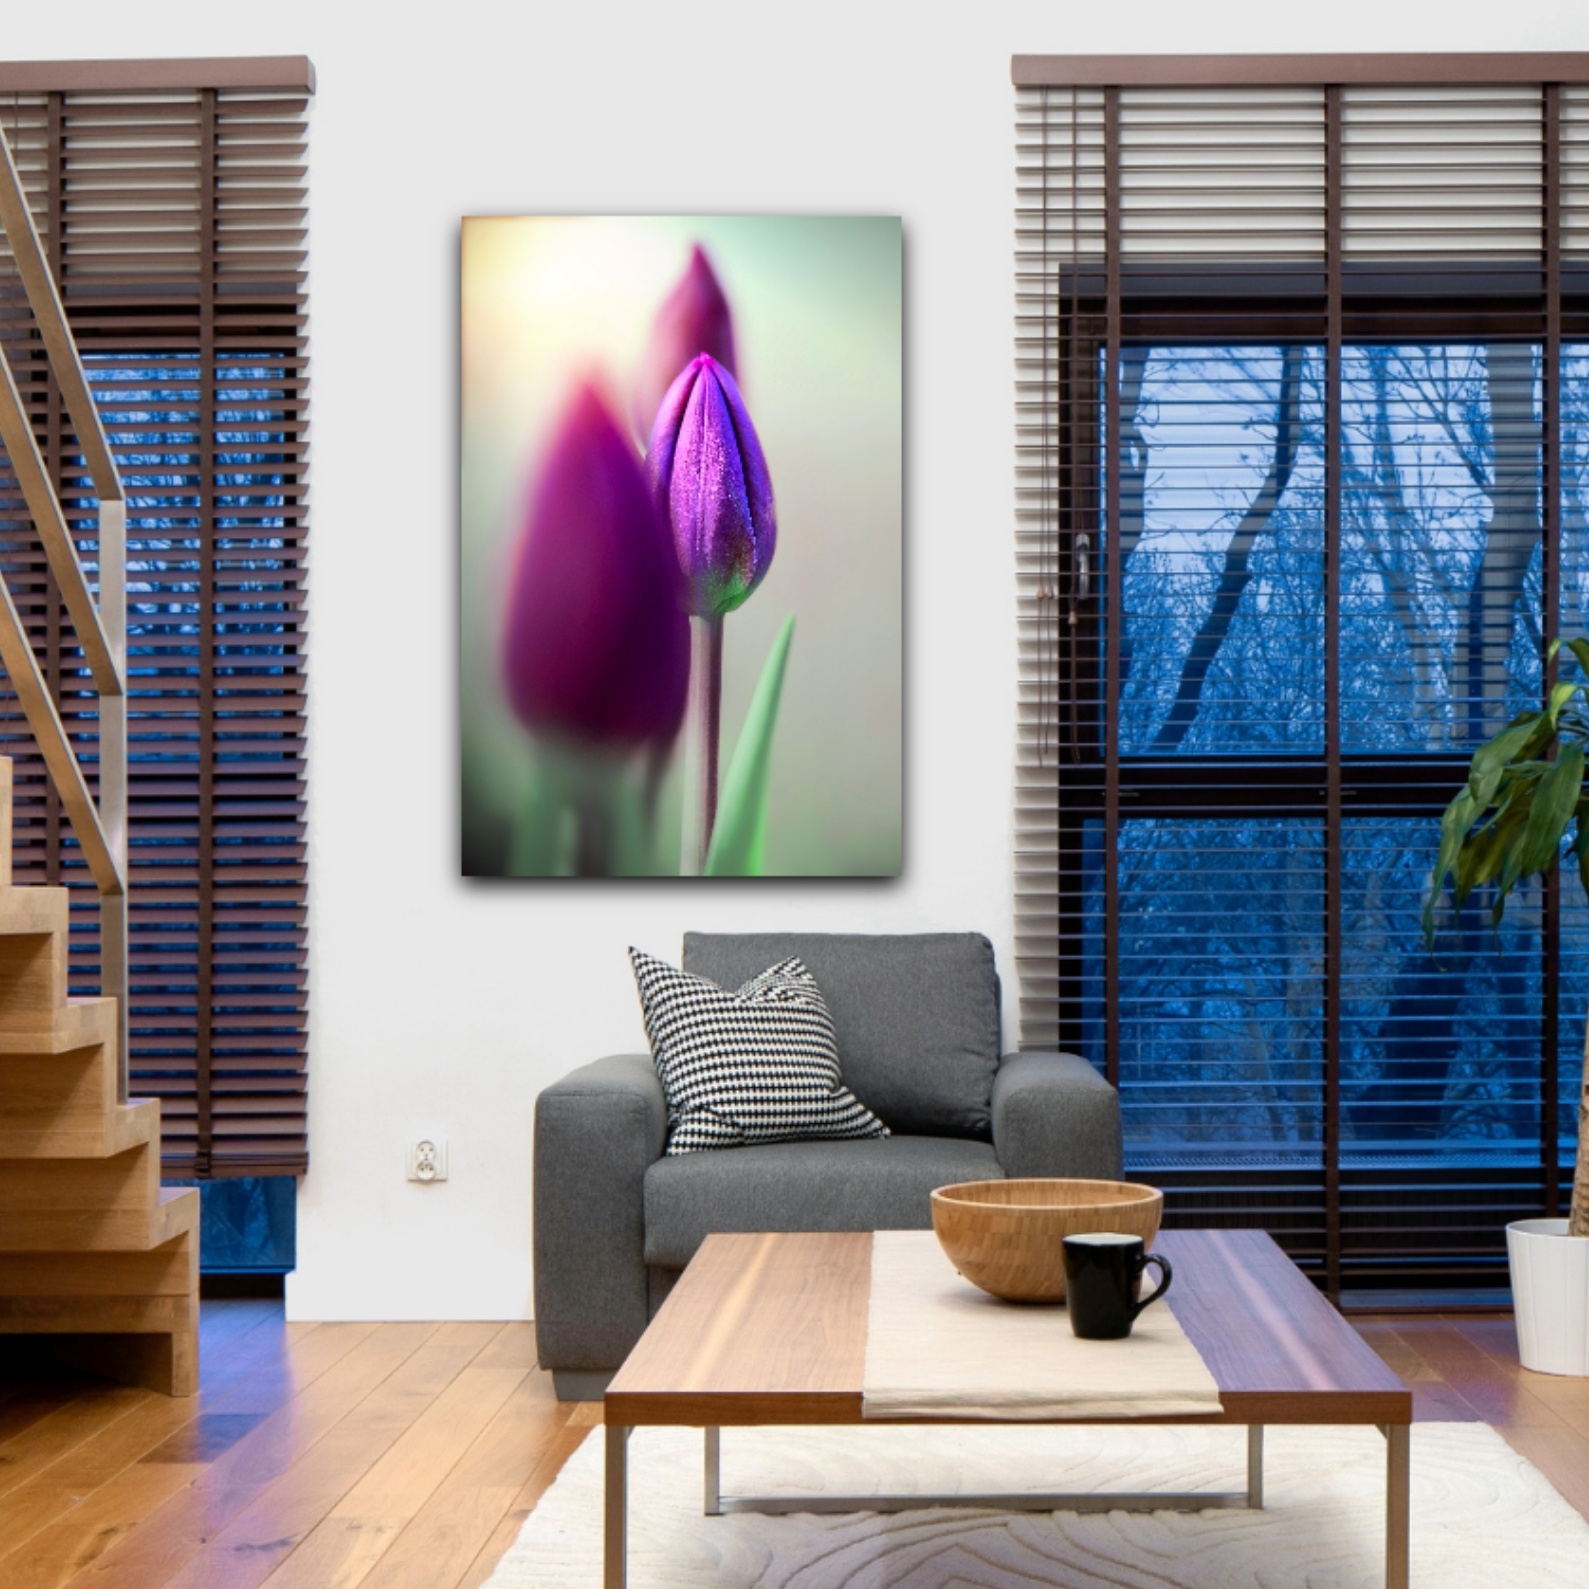 Wandbild Tulpe Wohnzimmer